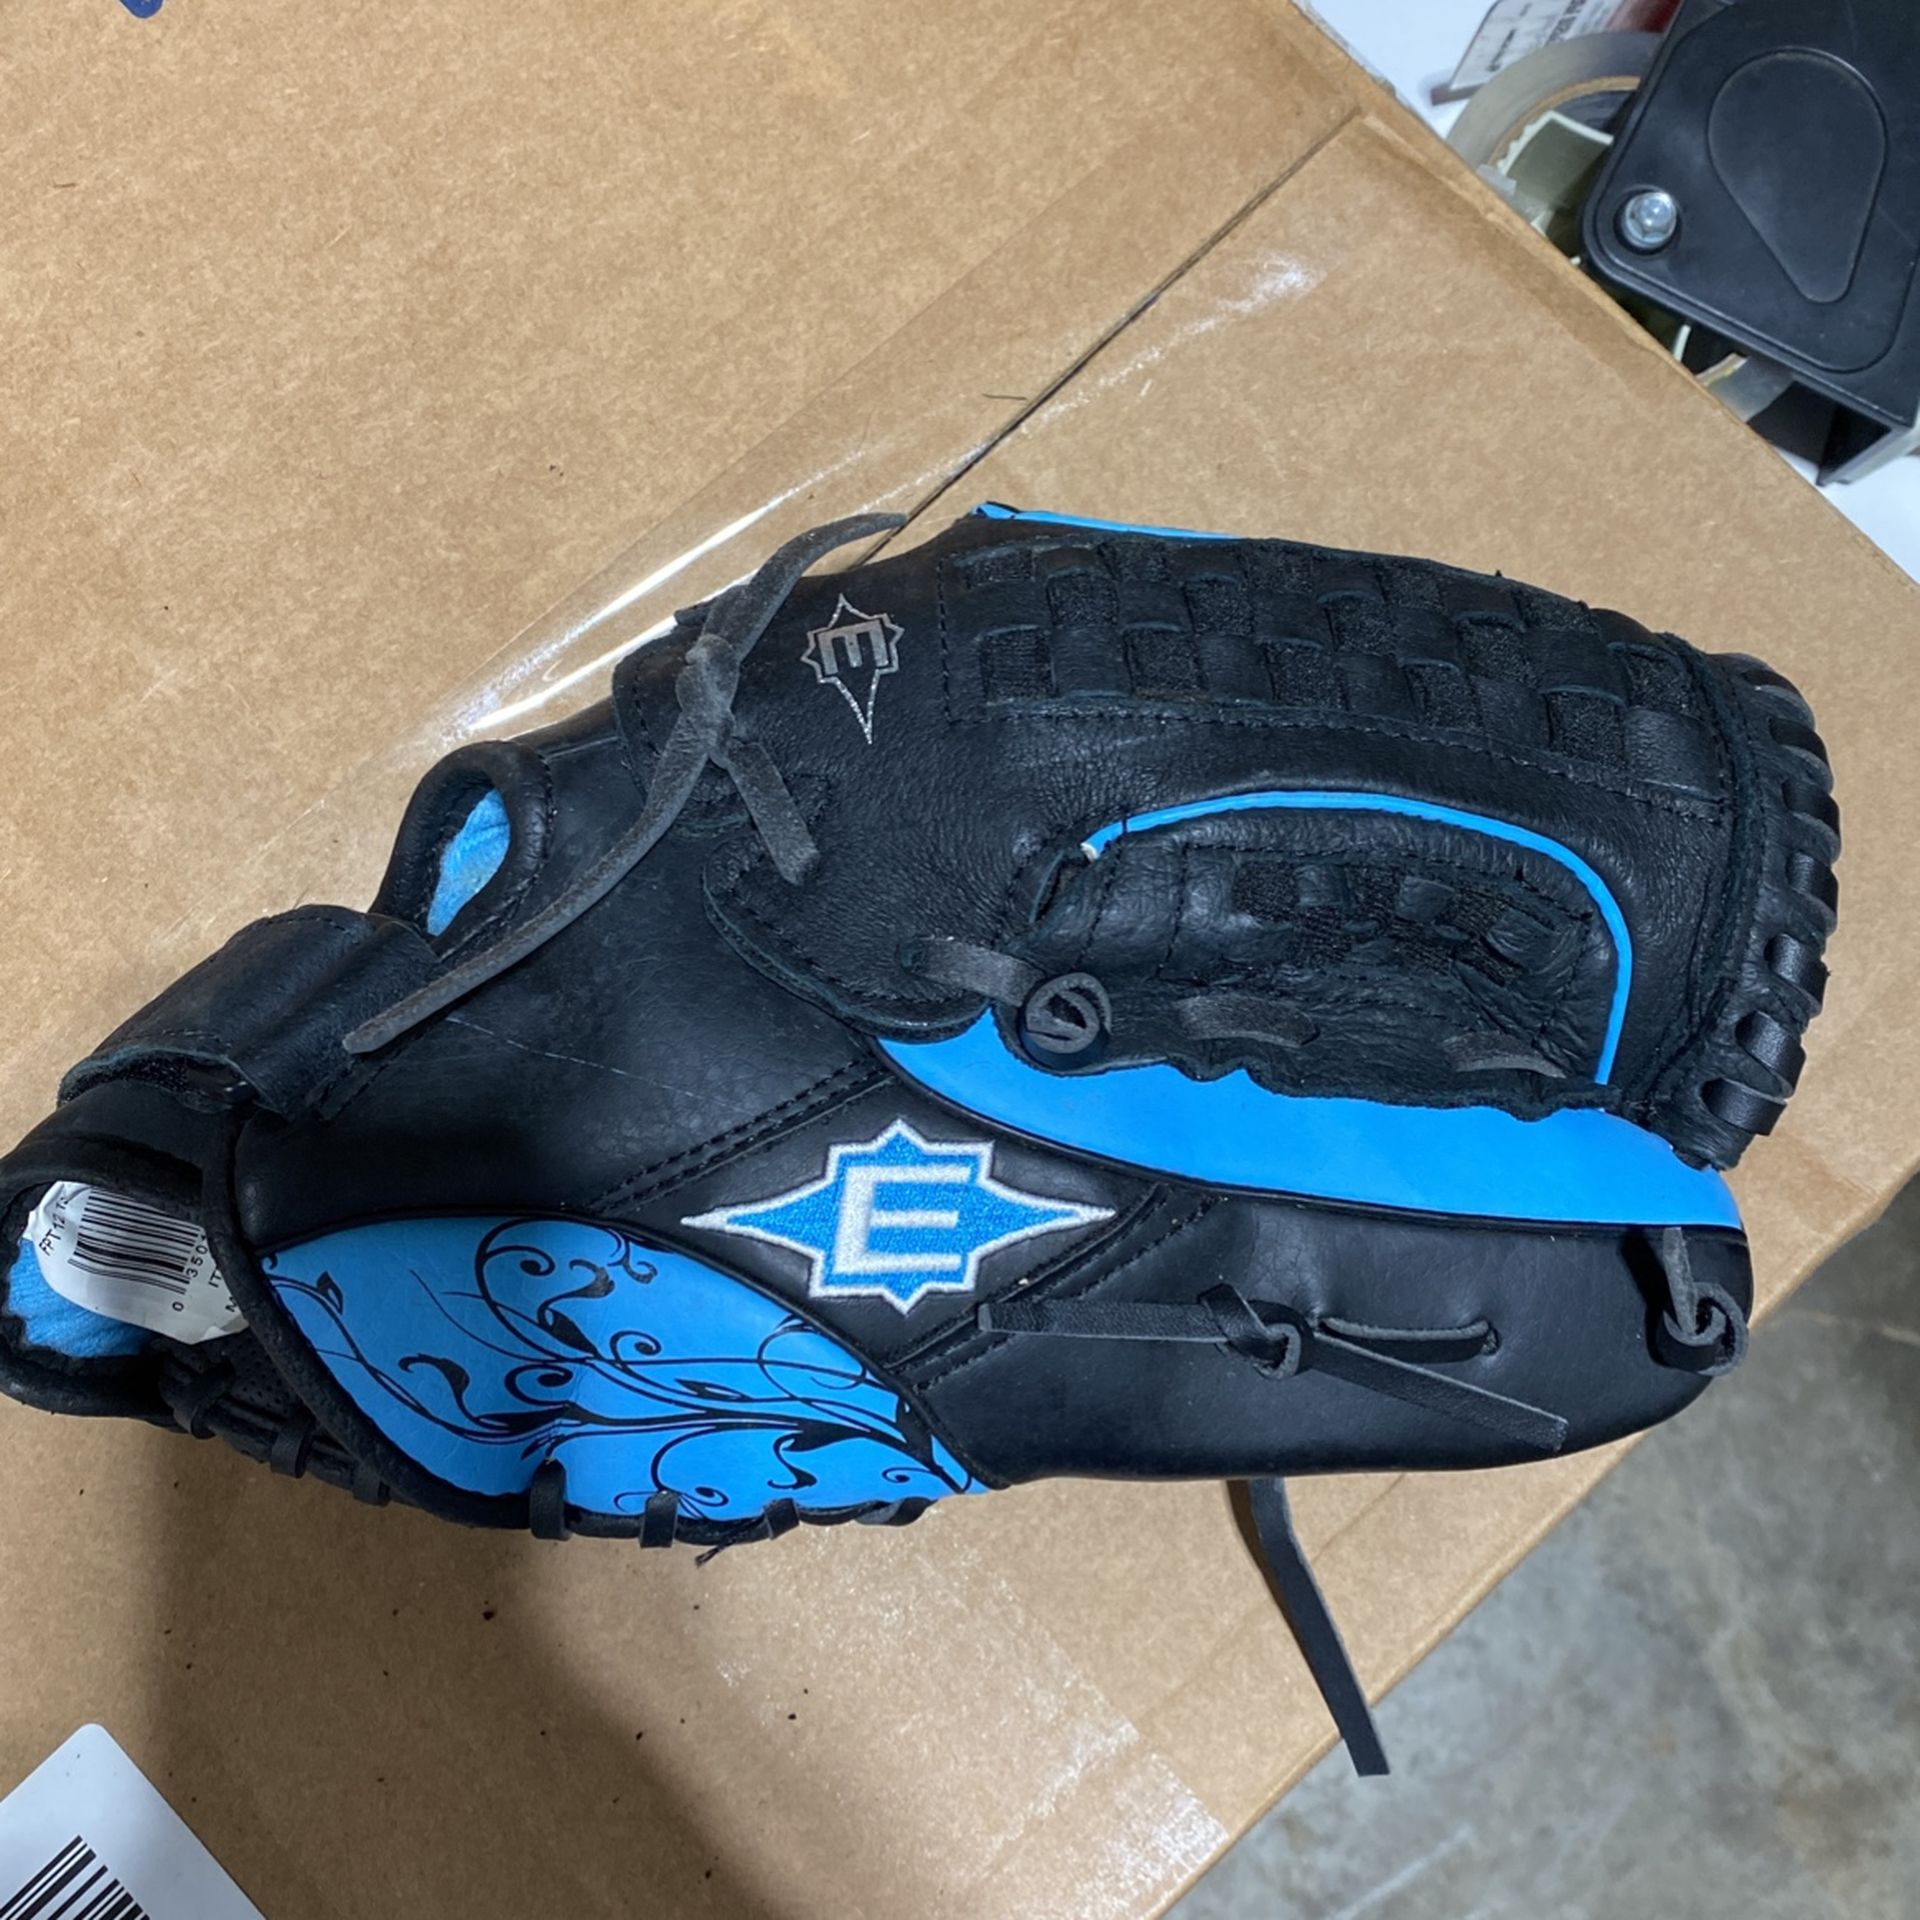 Easton Baseball Glove 12 1/2" Flex Leather Black Blue Silhouette Fp